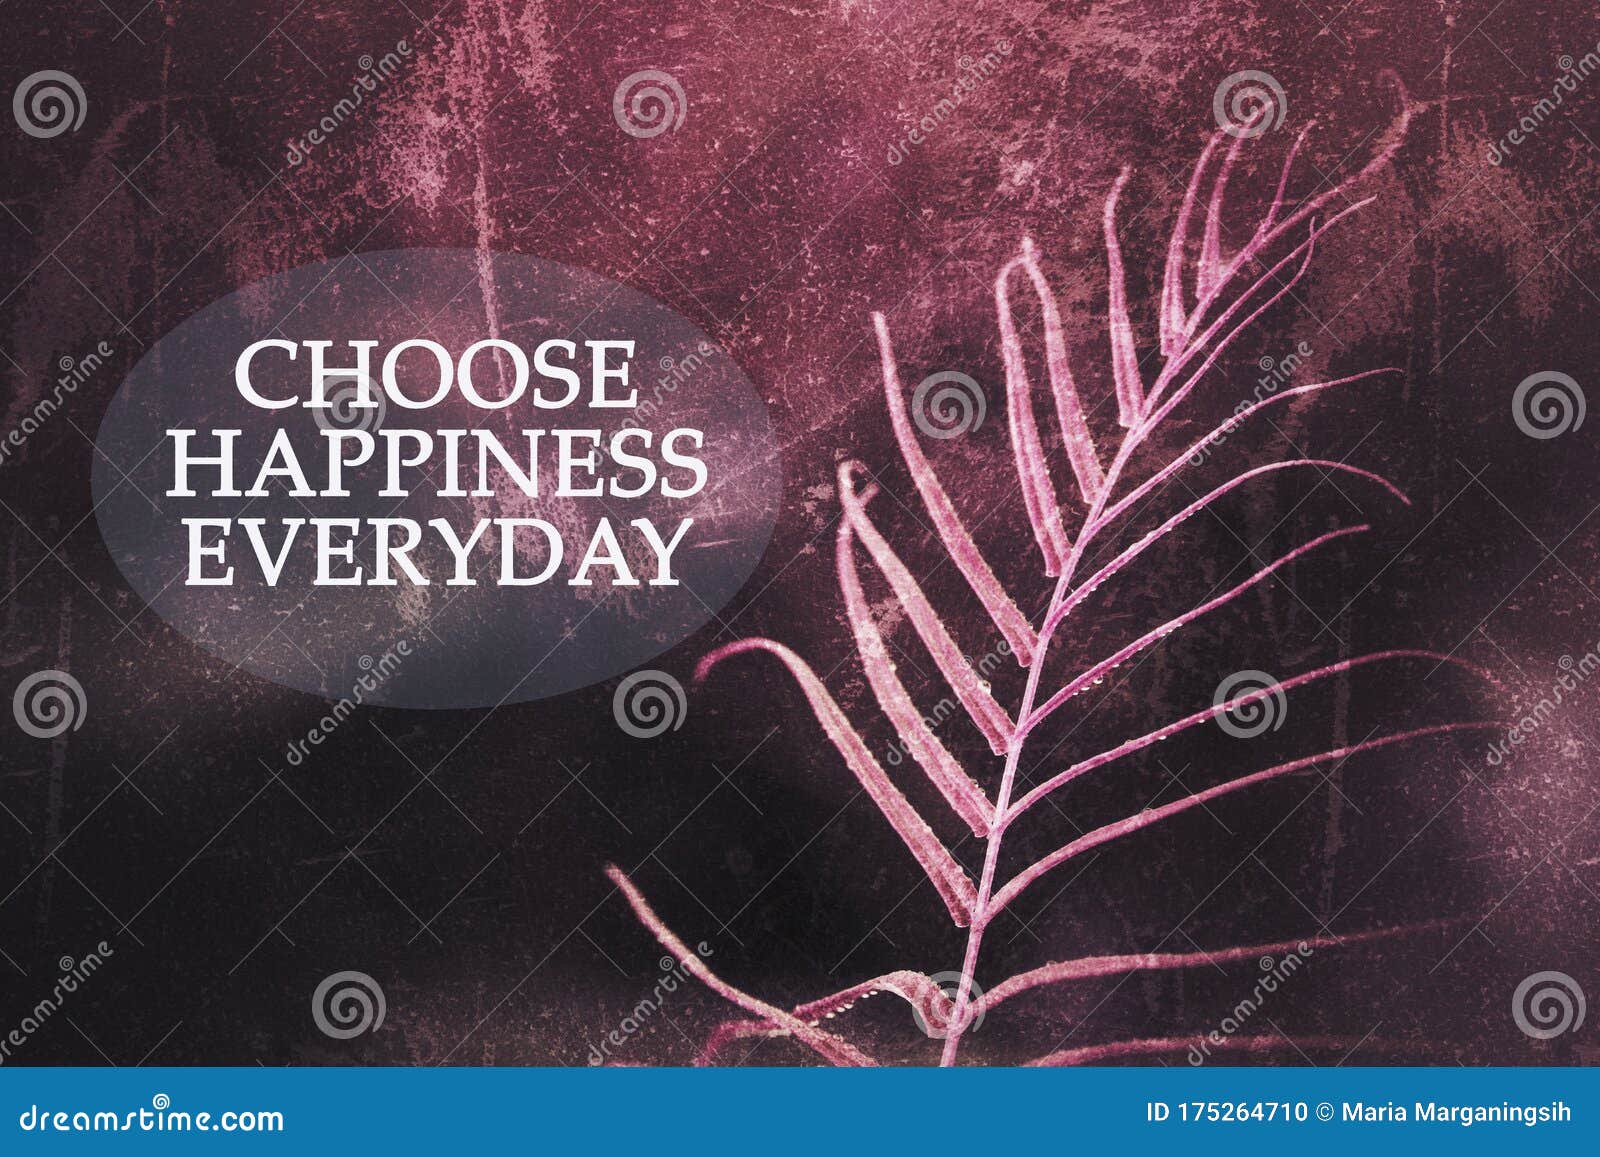 HD wallpaper choice choose choosing editorial happy happyness joy   Wallpaper Flare